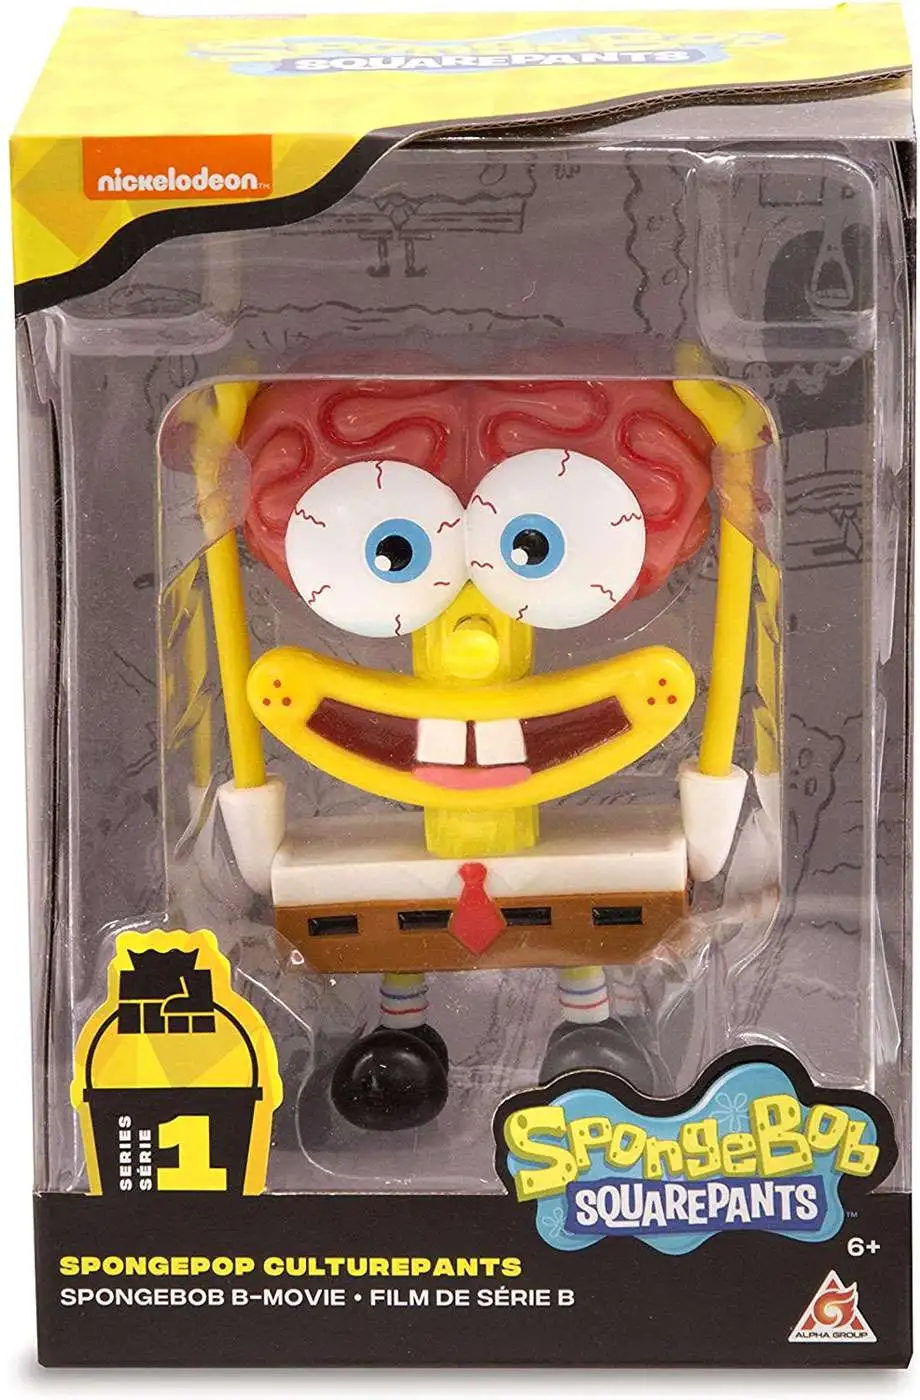 Nickelodeon Spongebob Squarepants Culturepants B-Movie Film Brain Figure Brain 